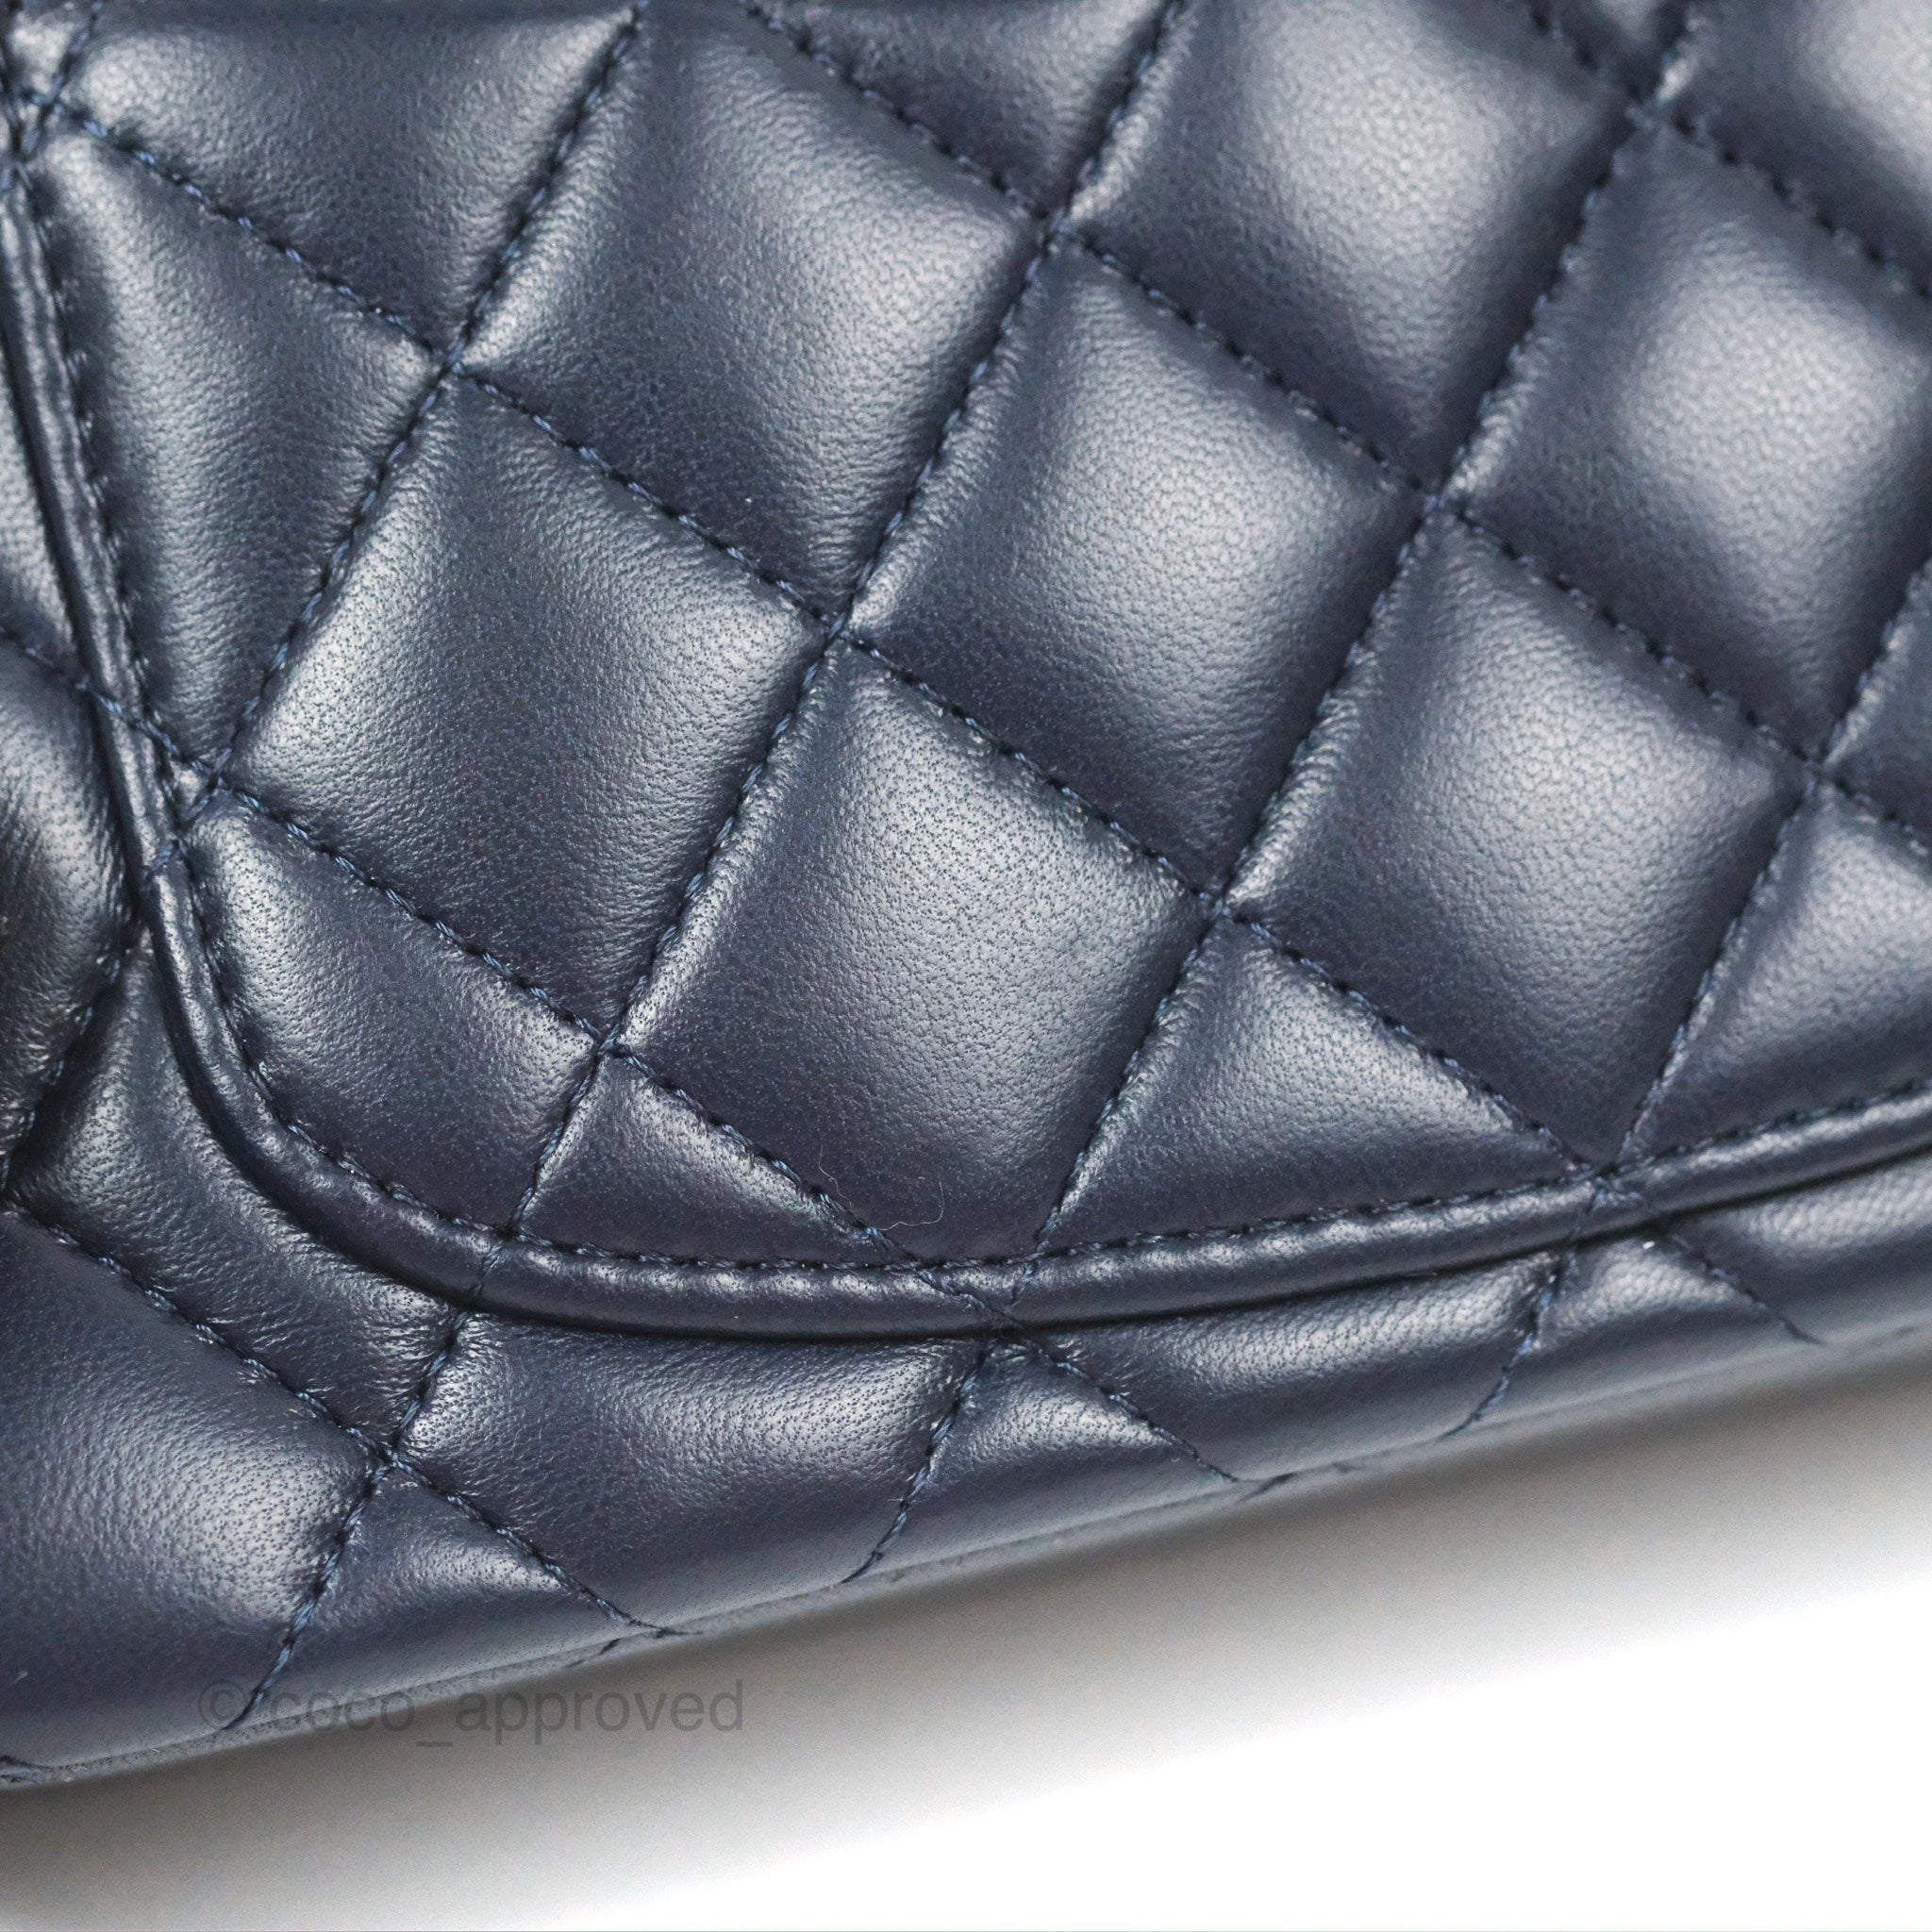 Chanel Top Handle Mini Rectangular Flap Bag Navy Lambskin Gold Hardwar – Coco  Approved Studio